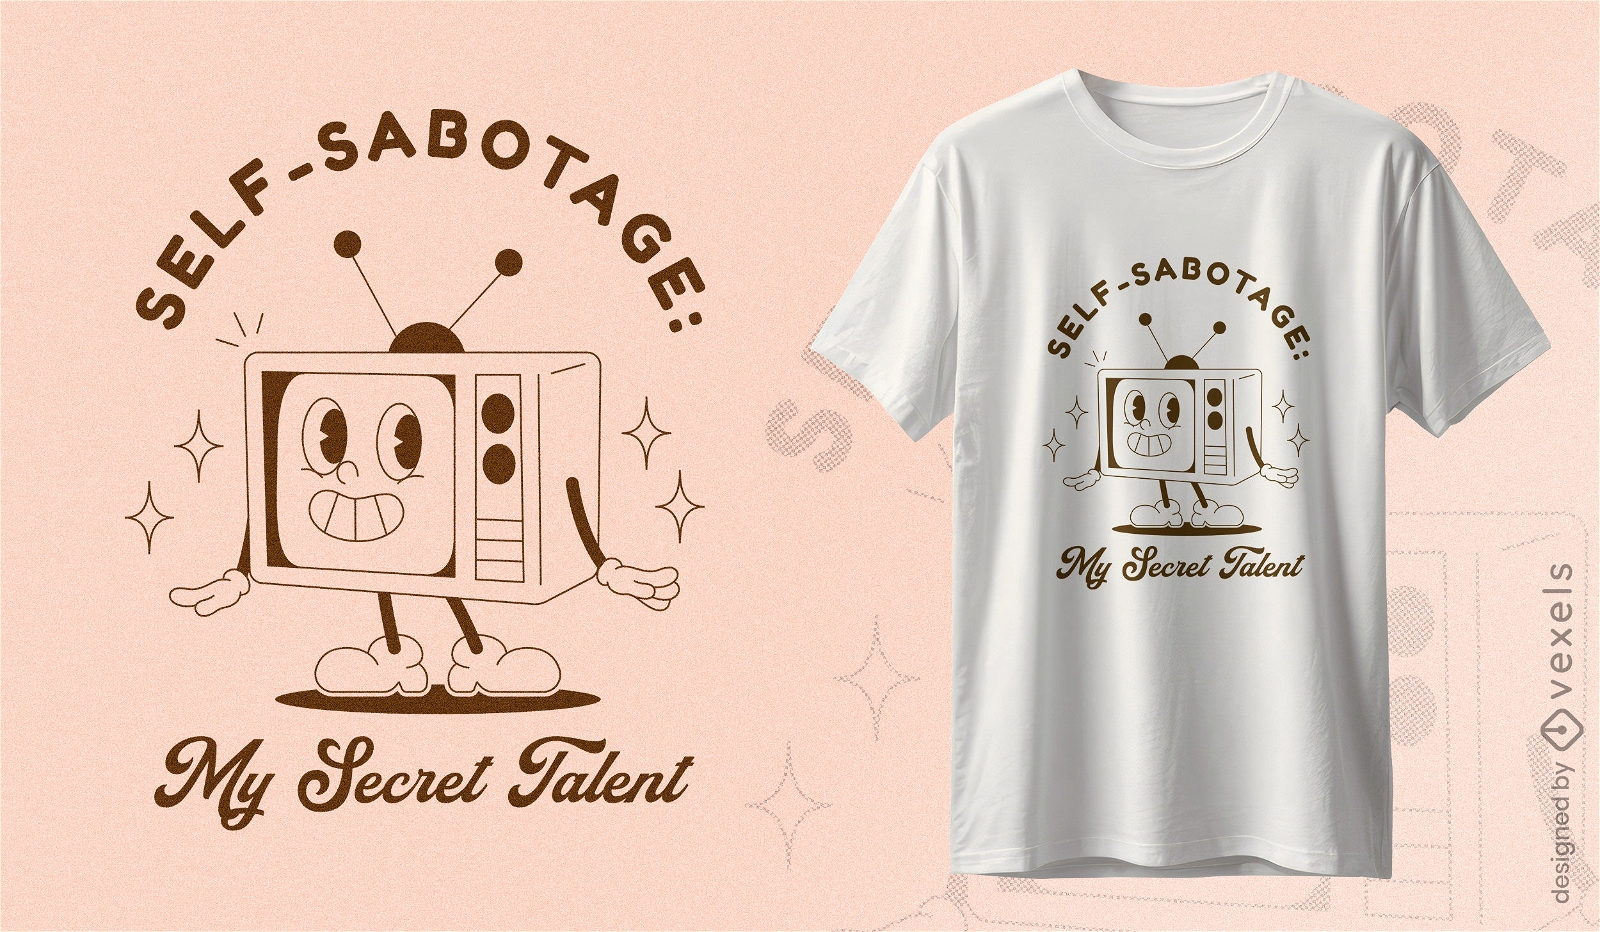 Self-sabotage television t-shirt design